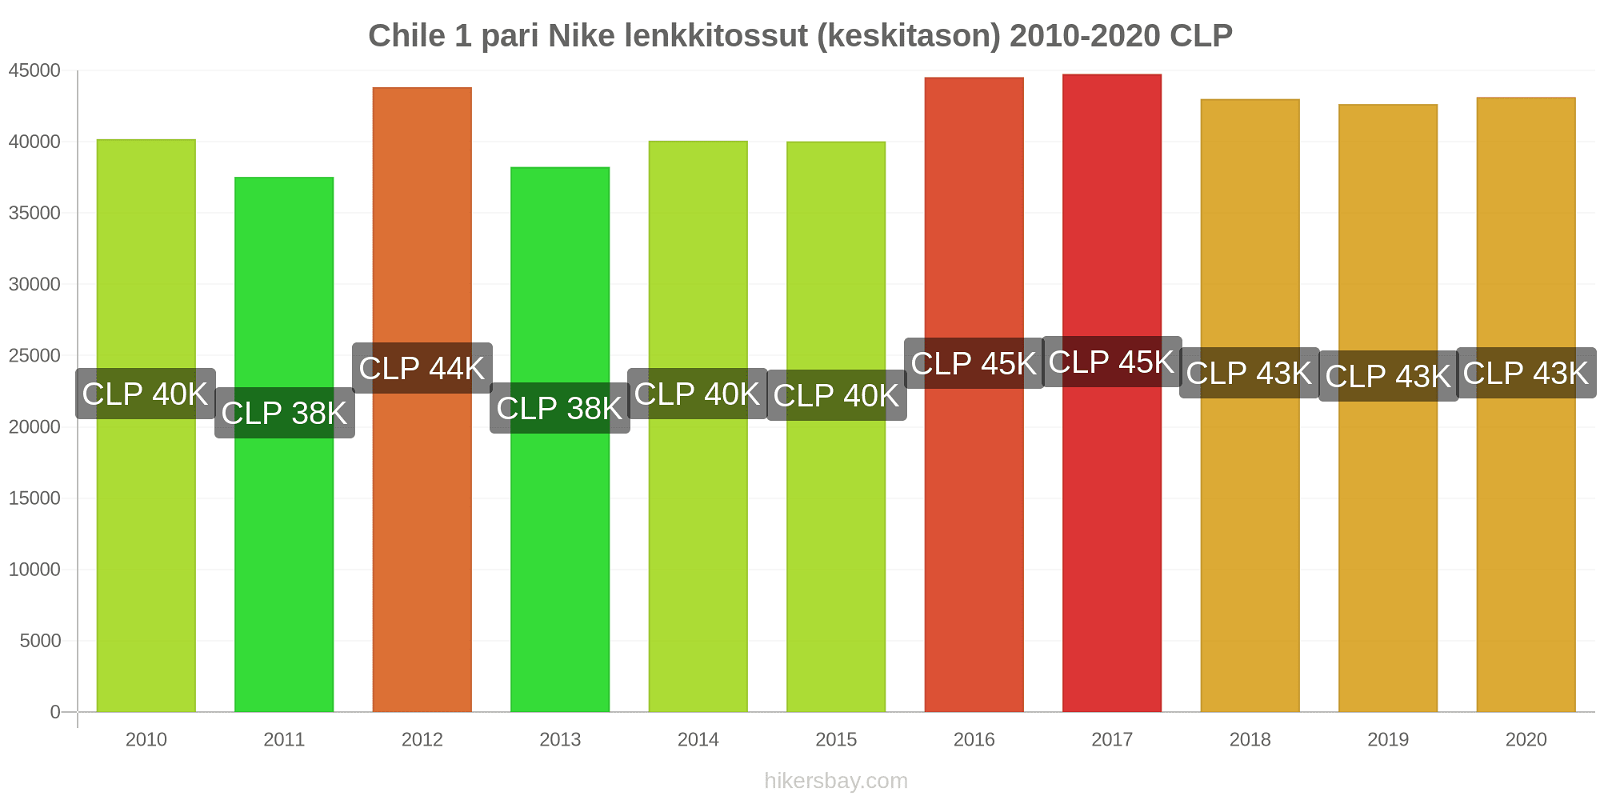 Chile hintojen muutokset 1 pari Nike lenkkitossut (keskitason) hikersbay.com